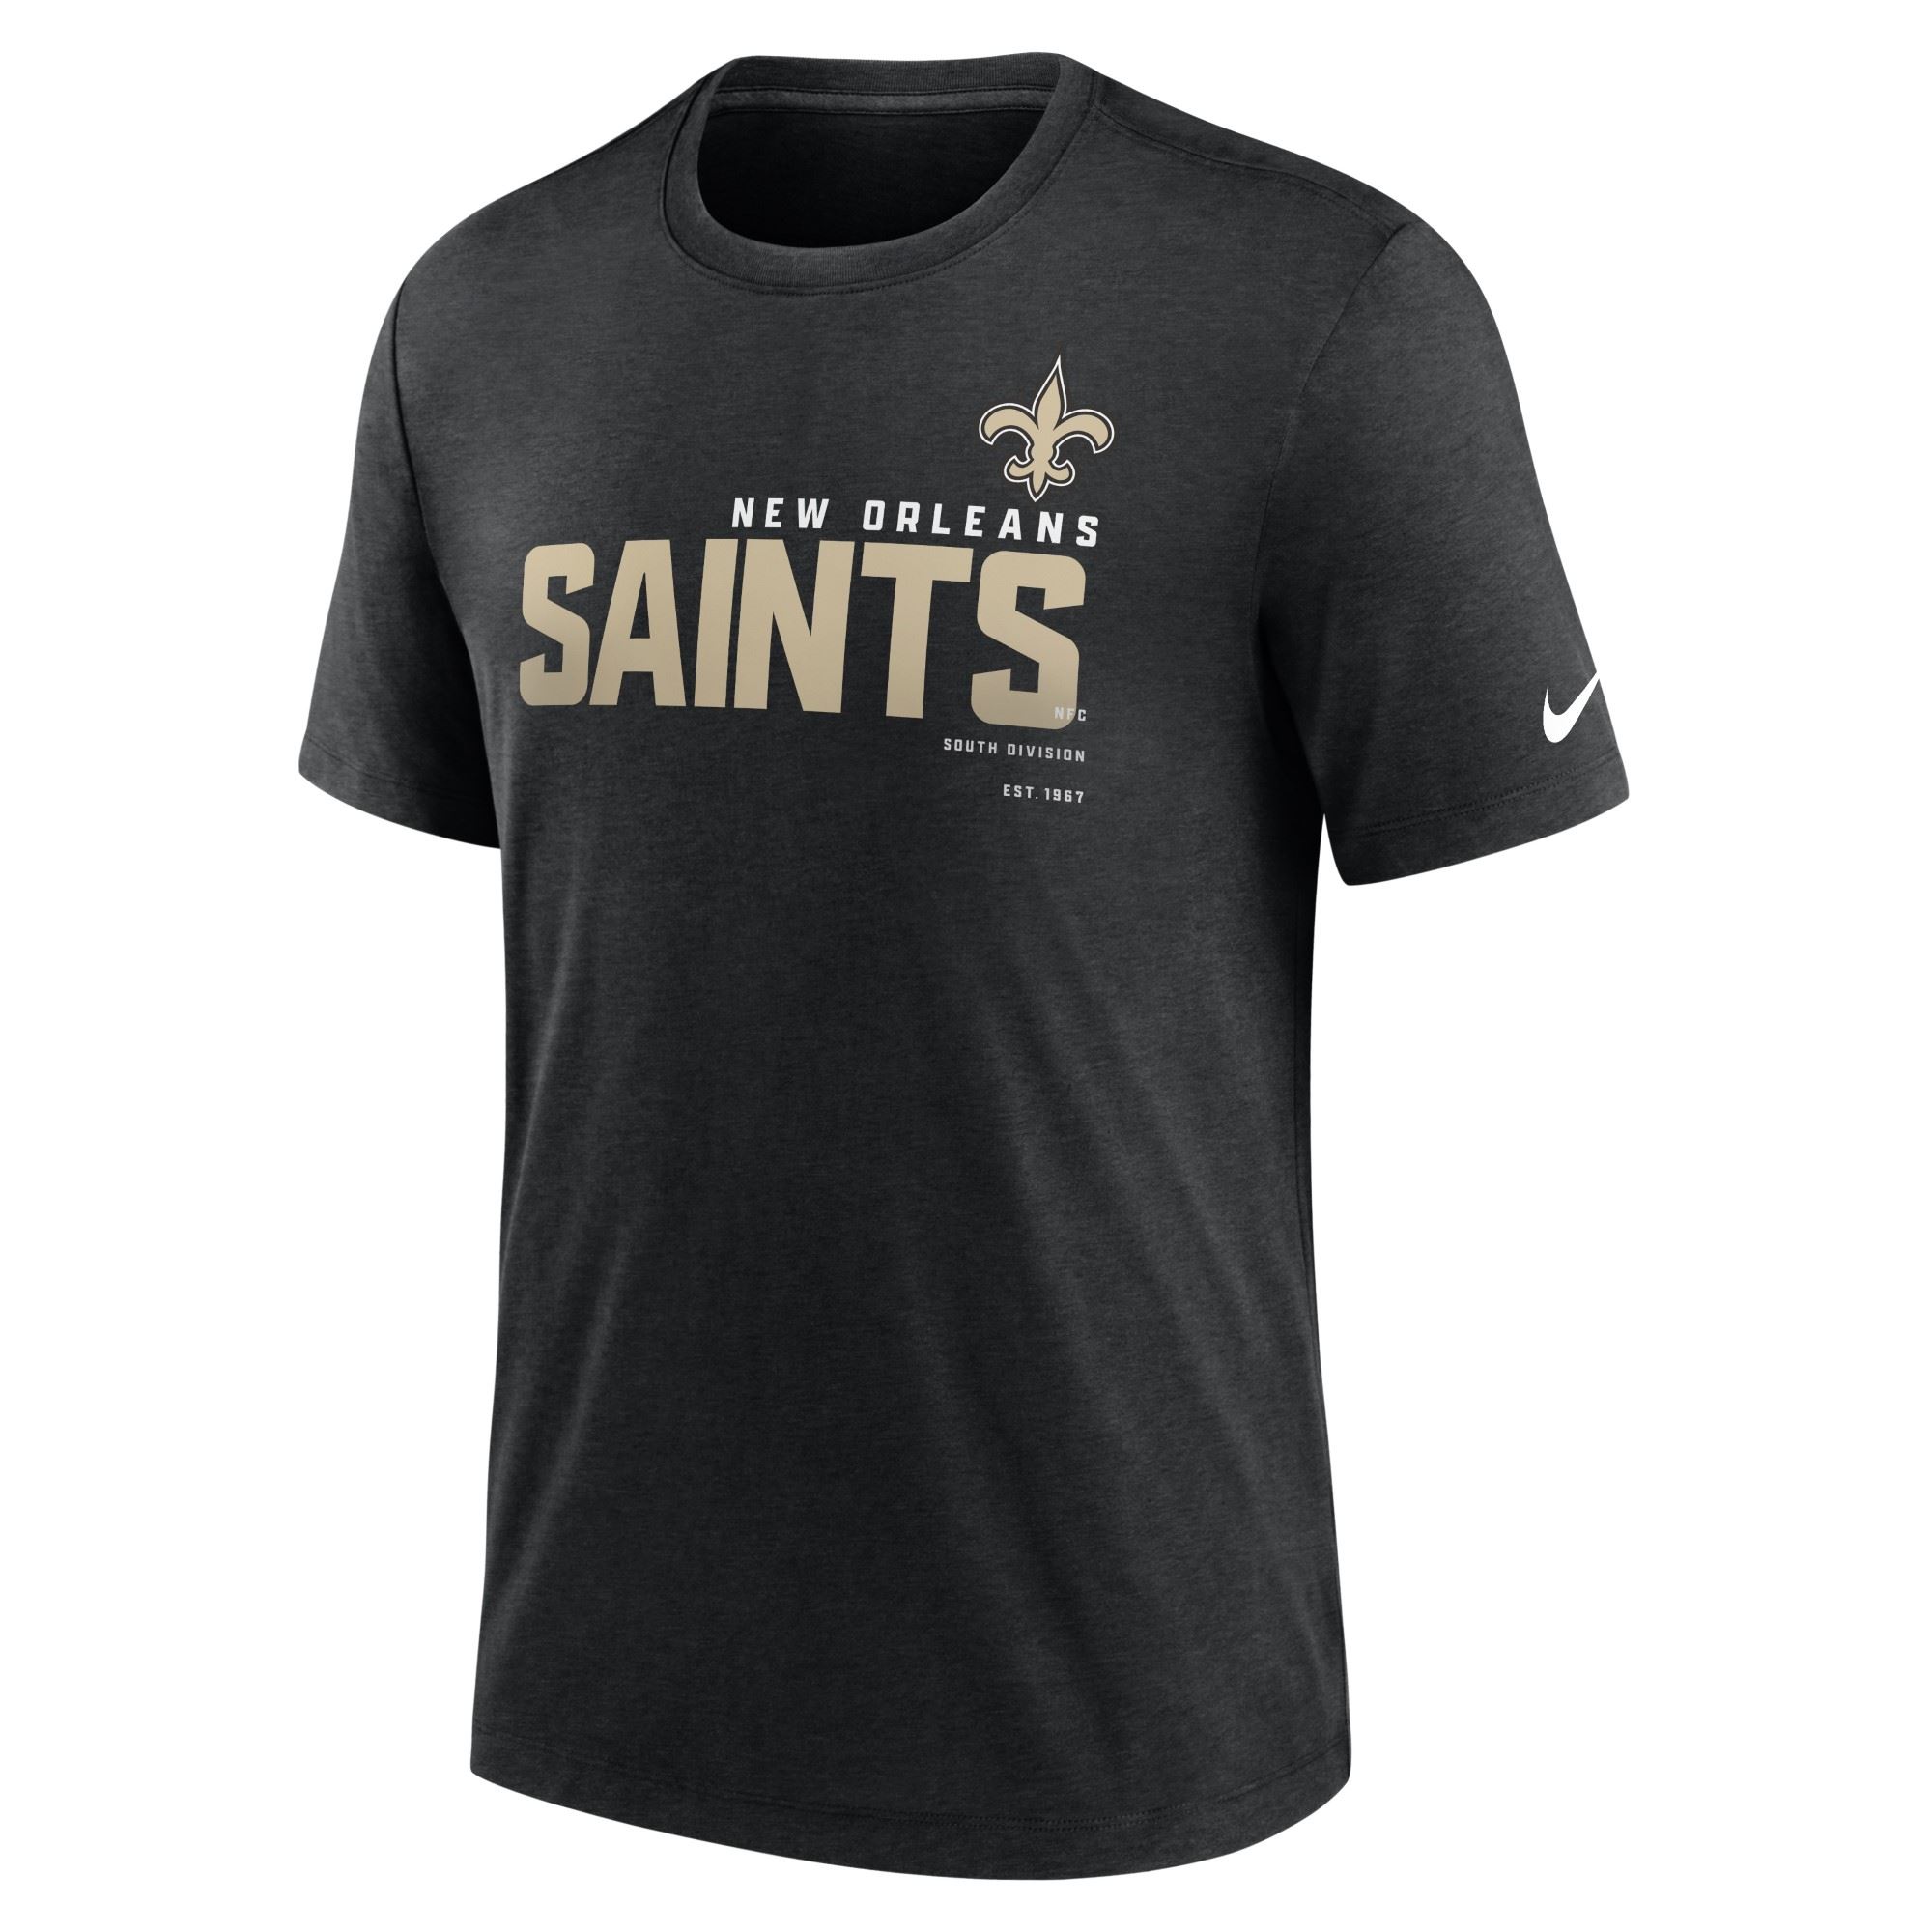 New Orleans Saints NFL Triblend Team Name Black Heather T-Shirt Nike